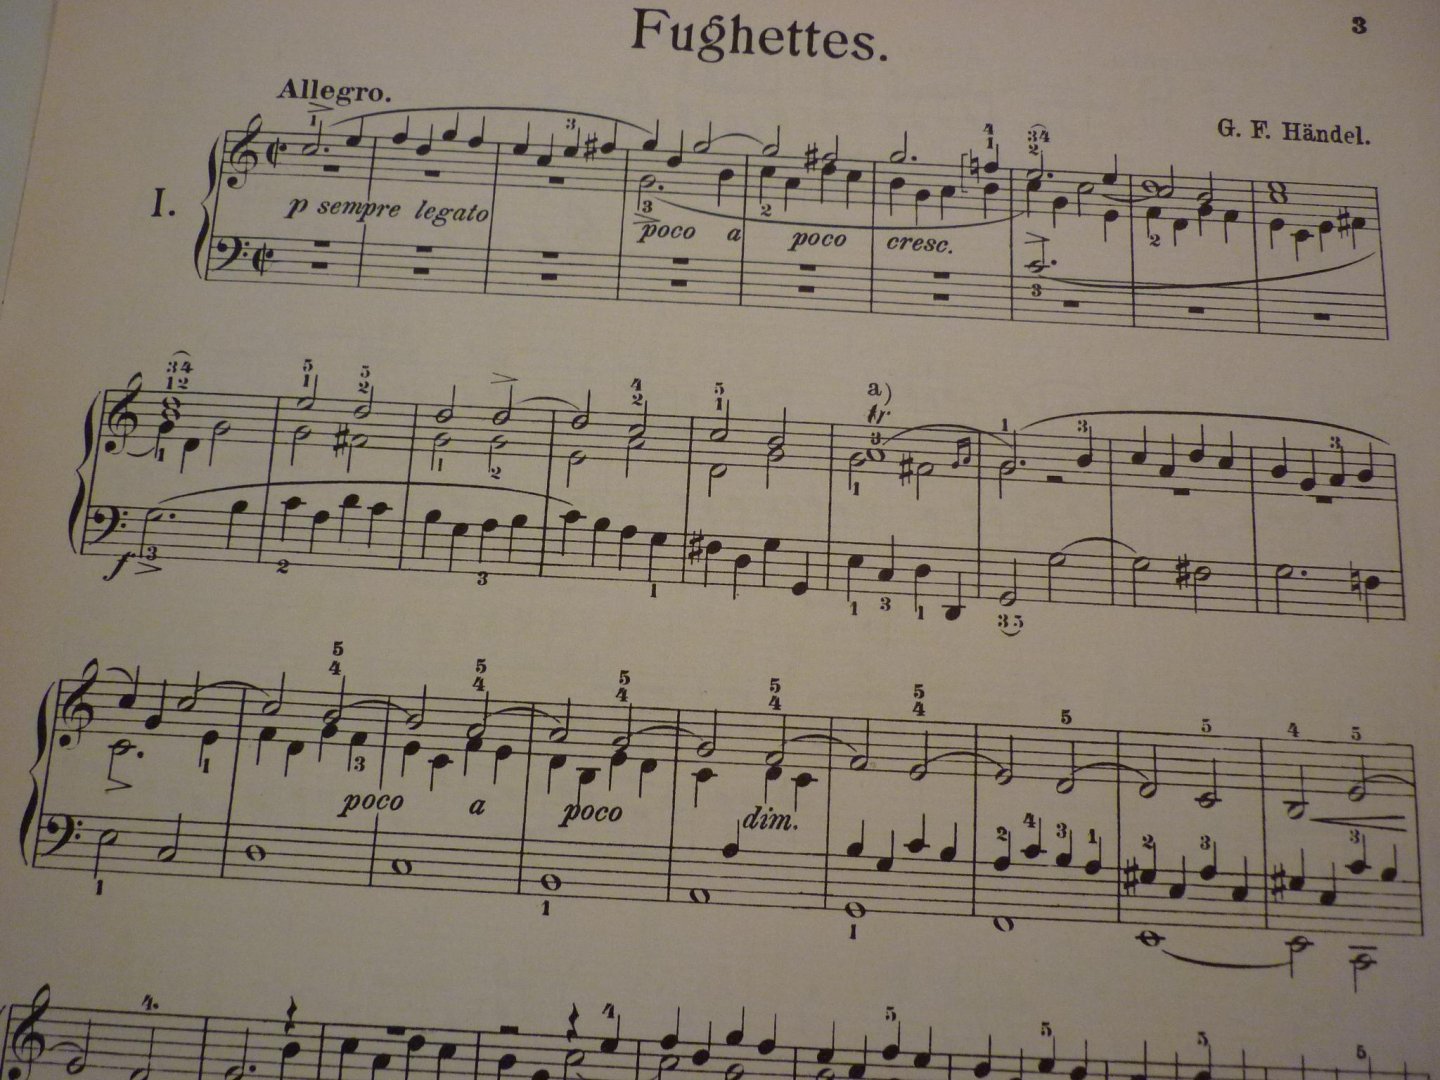 Handel; G.F. (1685 - 1759) - Fughettes (Adolf Ruthardt)